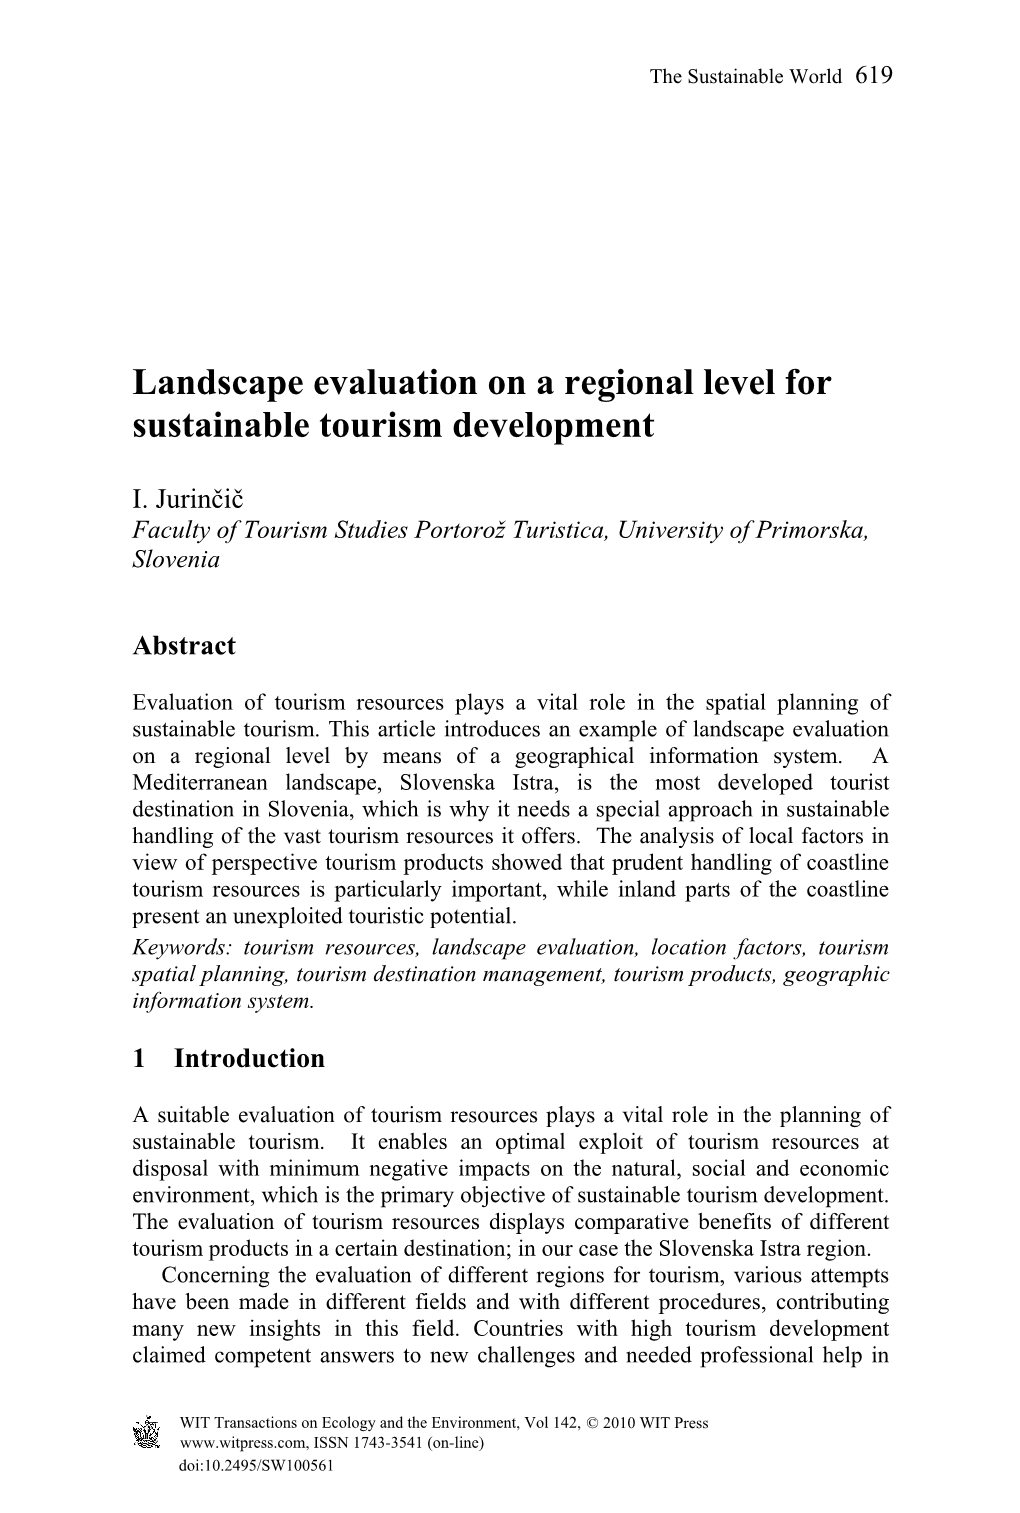 Landscape Evaluation on a Regional Level for Sustainable Tourism Development